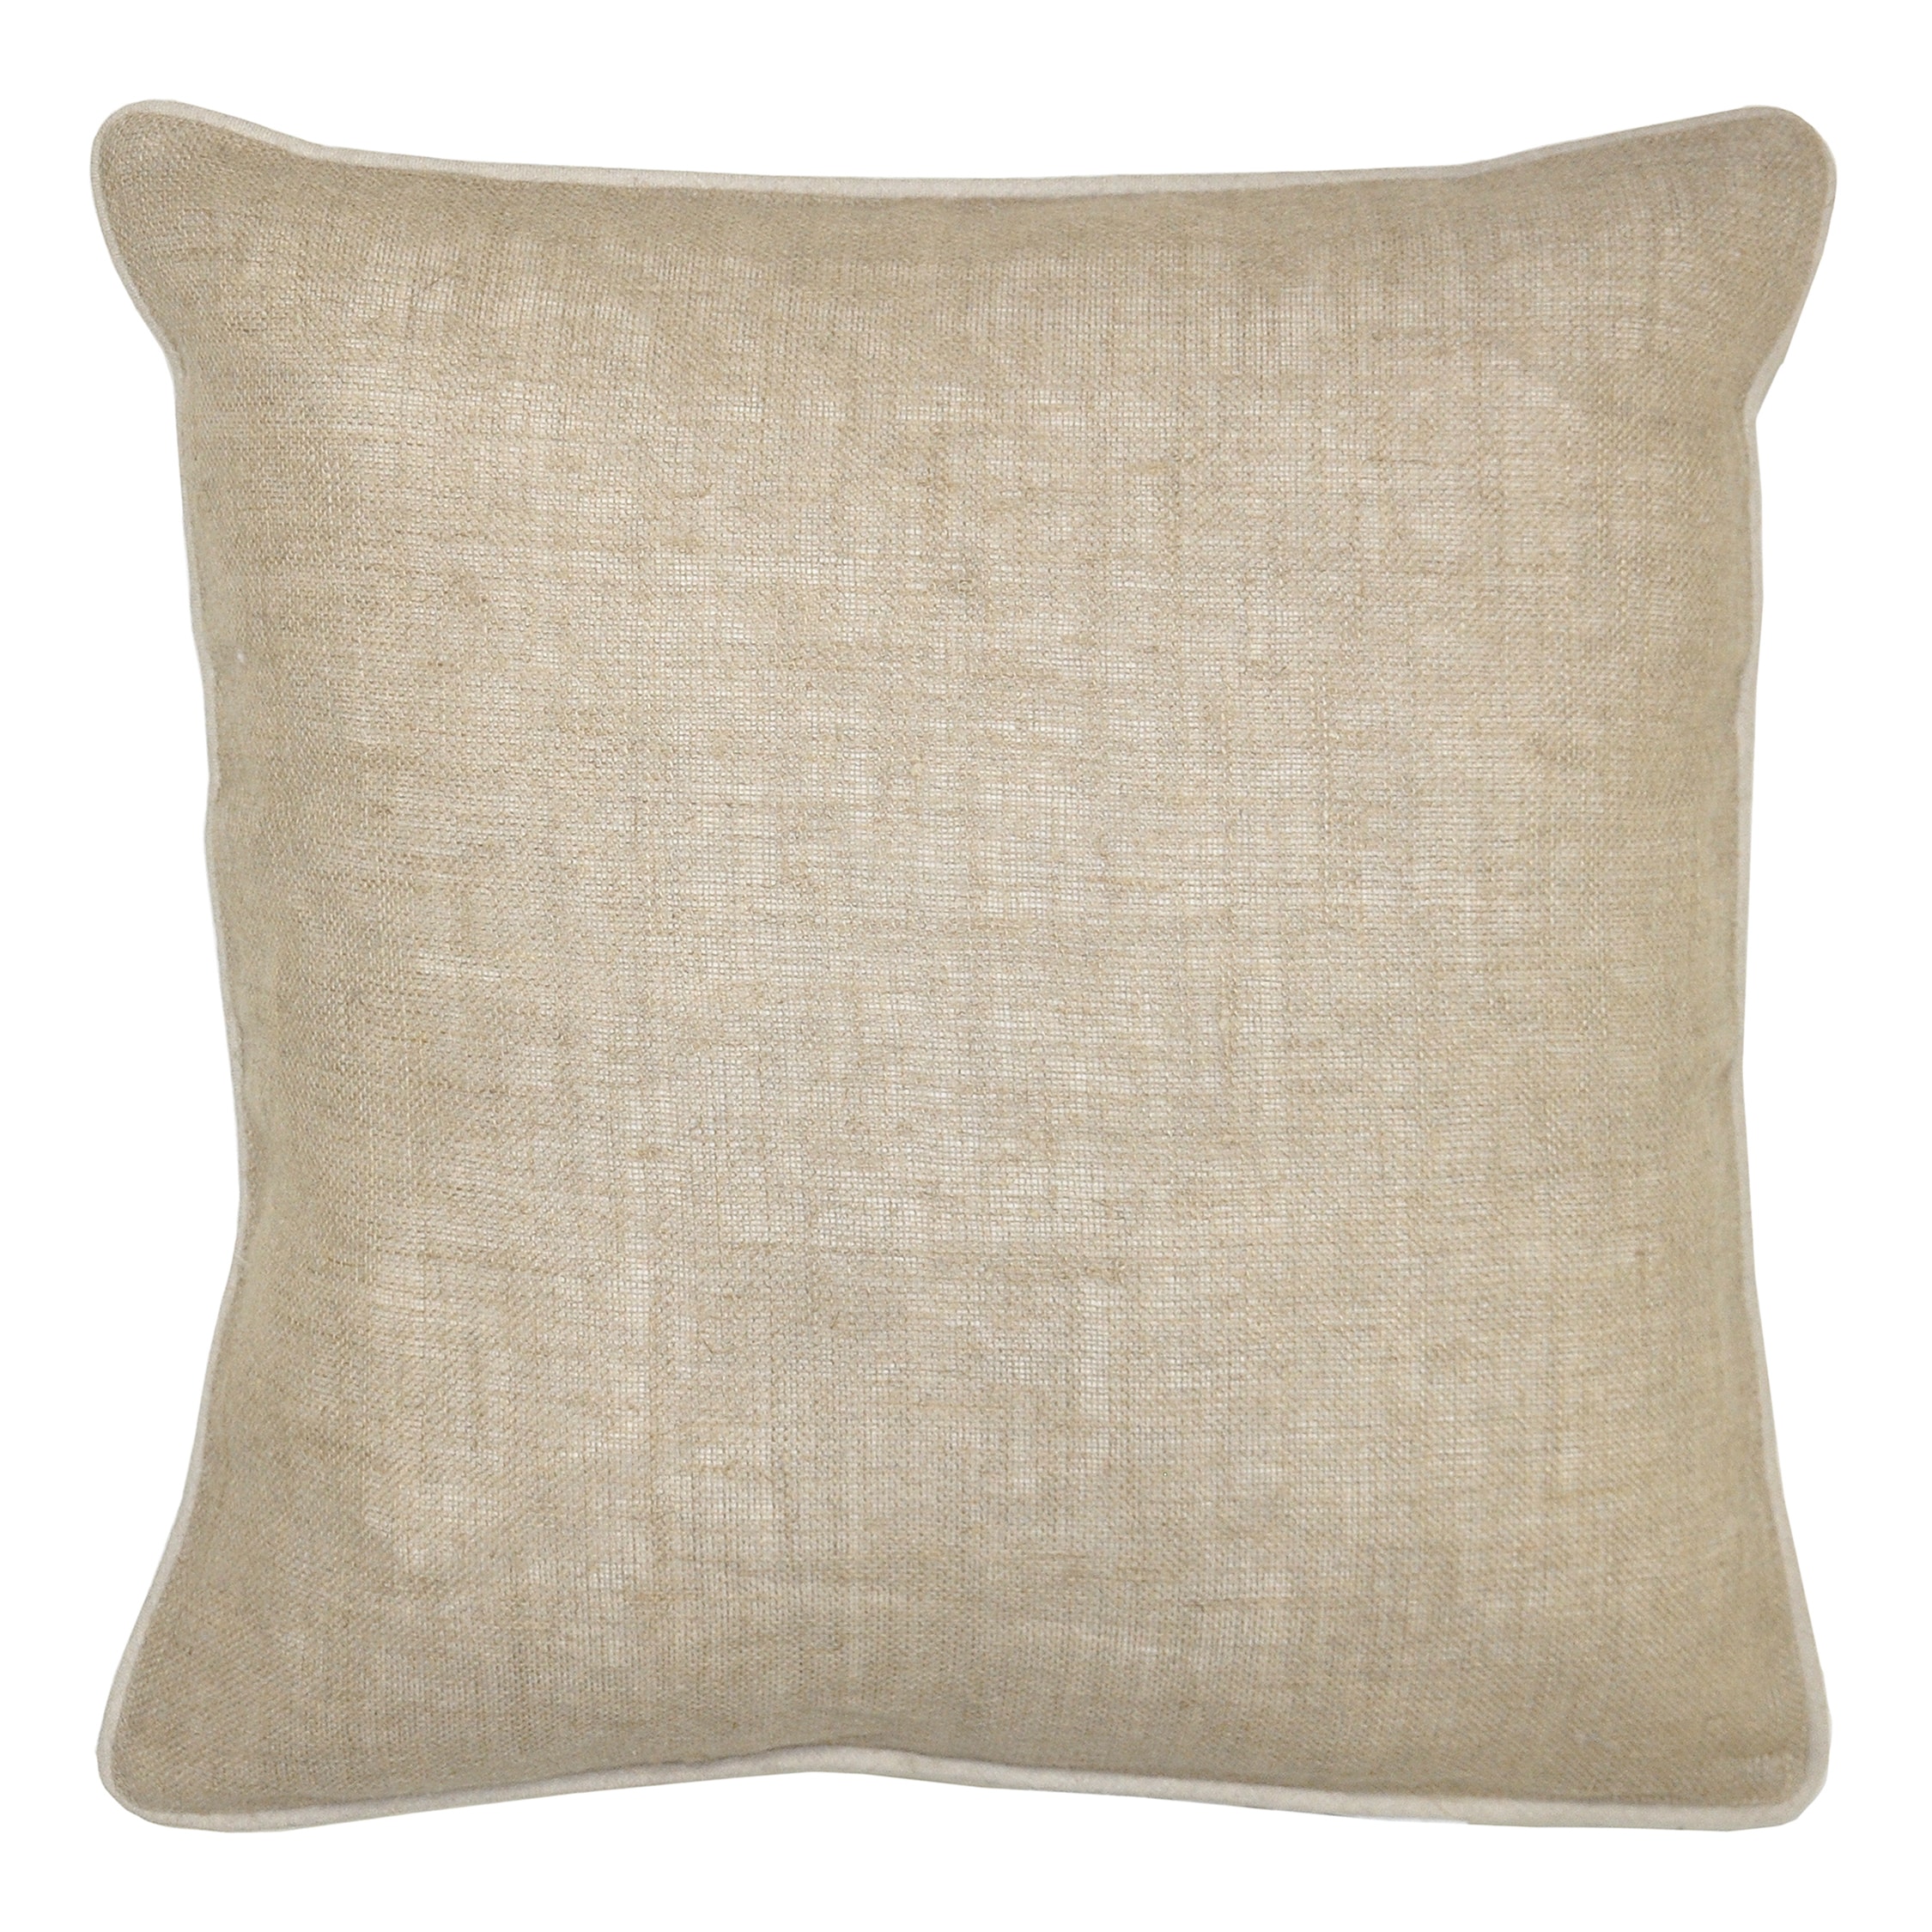 Villa Textured Linen Natural Decorative Throw Pillows (Set of 2) Today